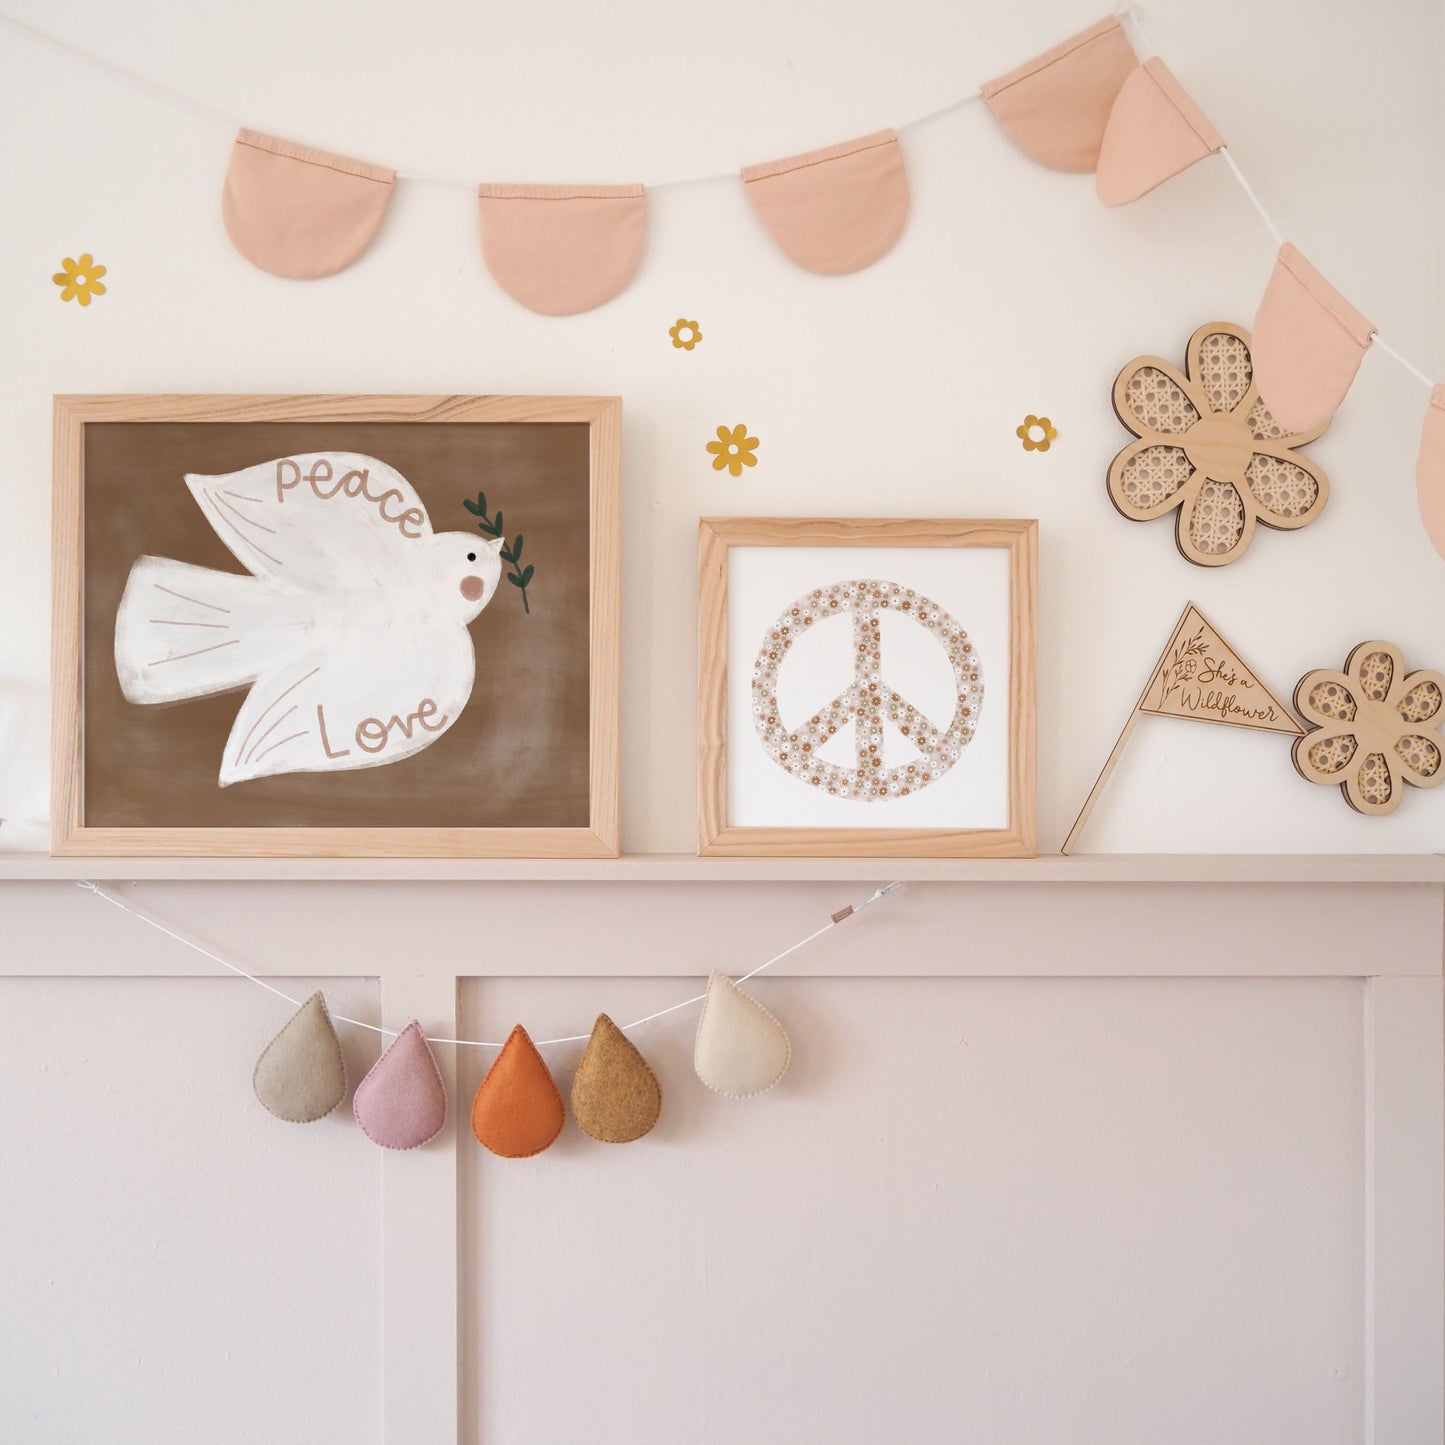 Peace and Love Bird Print